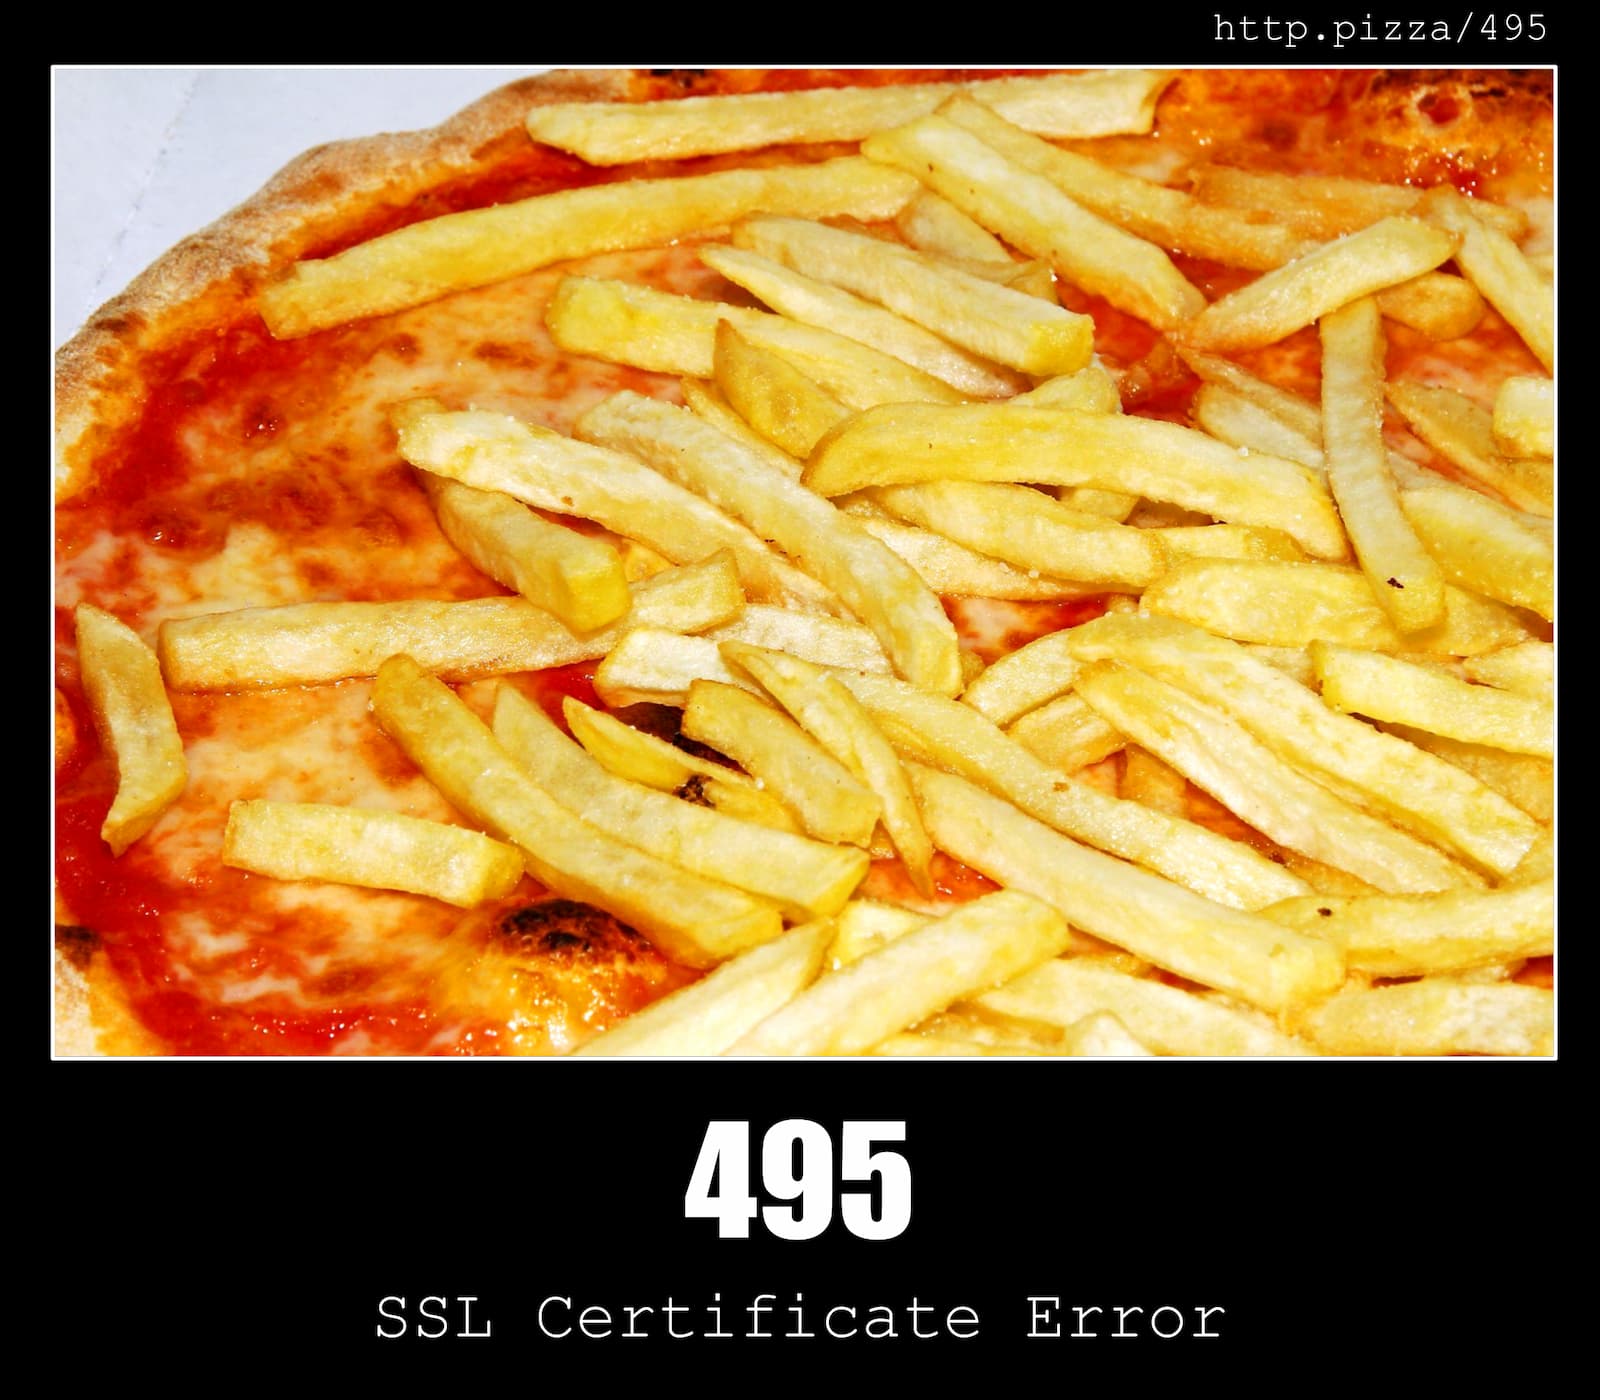 HTTP Status Code 495 SSL Certificate Error & Pizzas